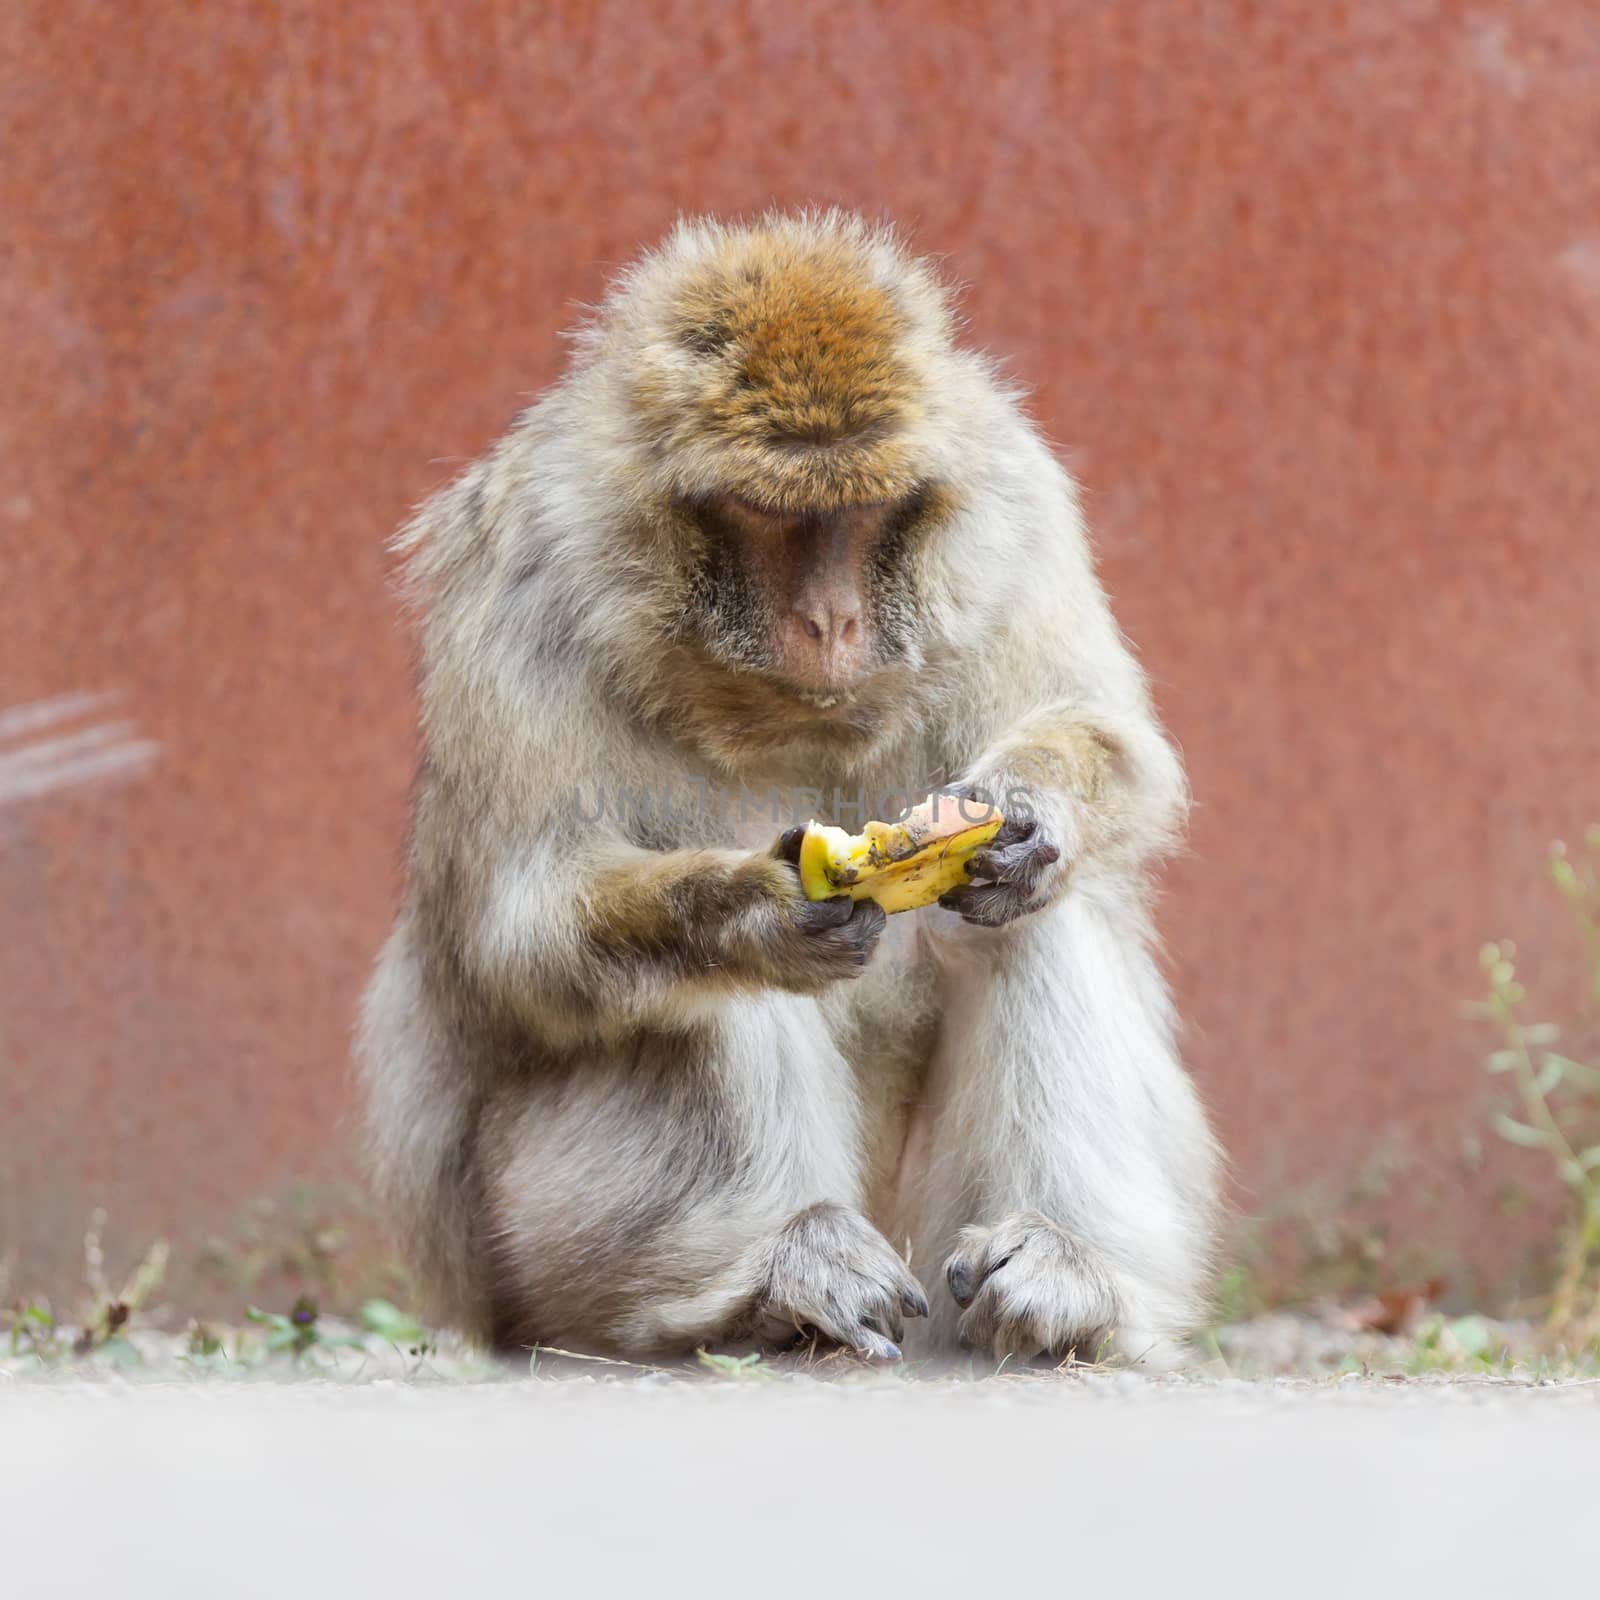 Barbary Macaque (Macaca sylvanus) by michaklootwijk